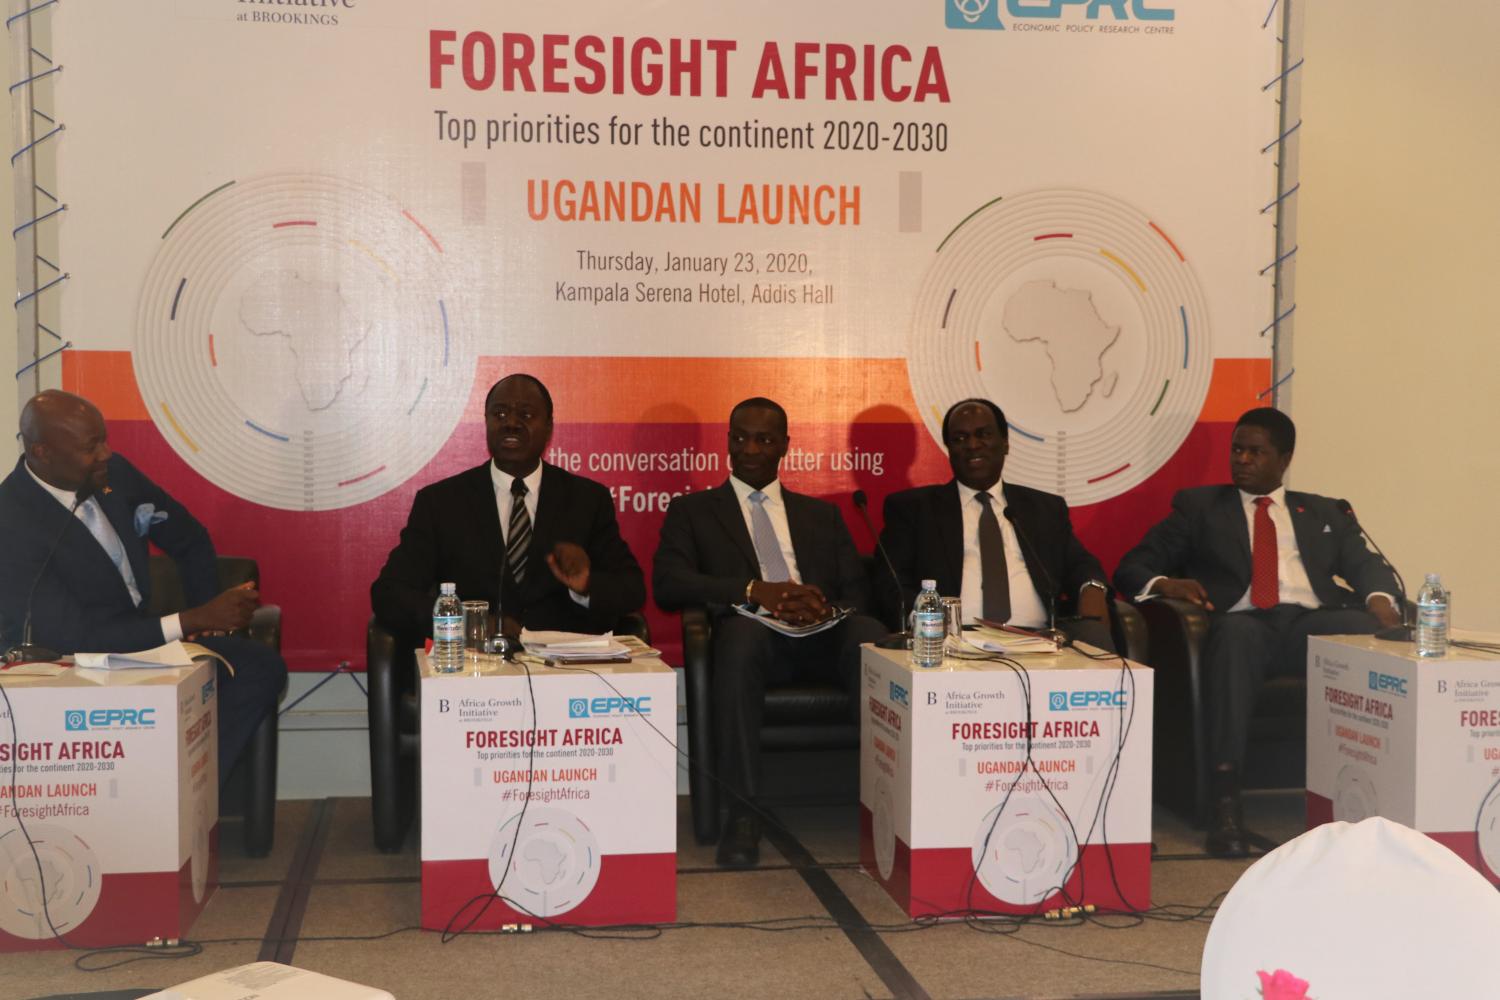 Foresight Africa 2020-2030 launch in Uganda